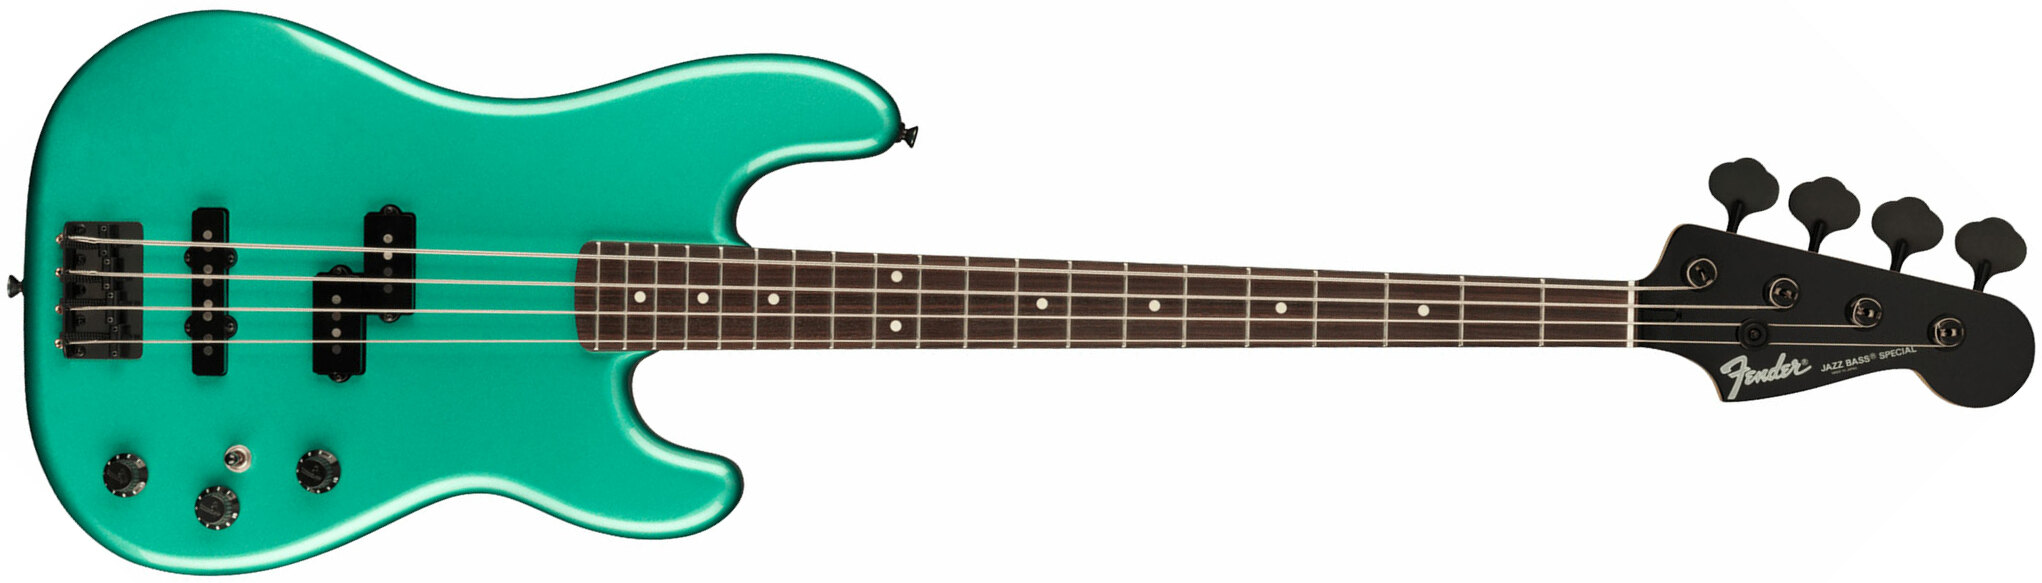 Fender Precision Bass Pj Boxer Jap Rw - Sherwood Green Metallic - Solidbody E-bass - Main picture